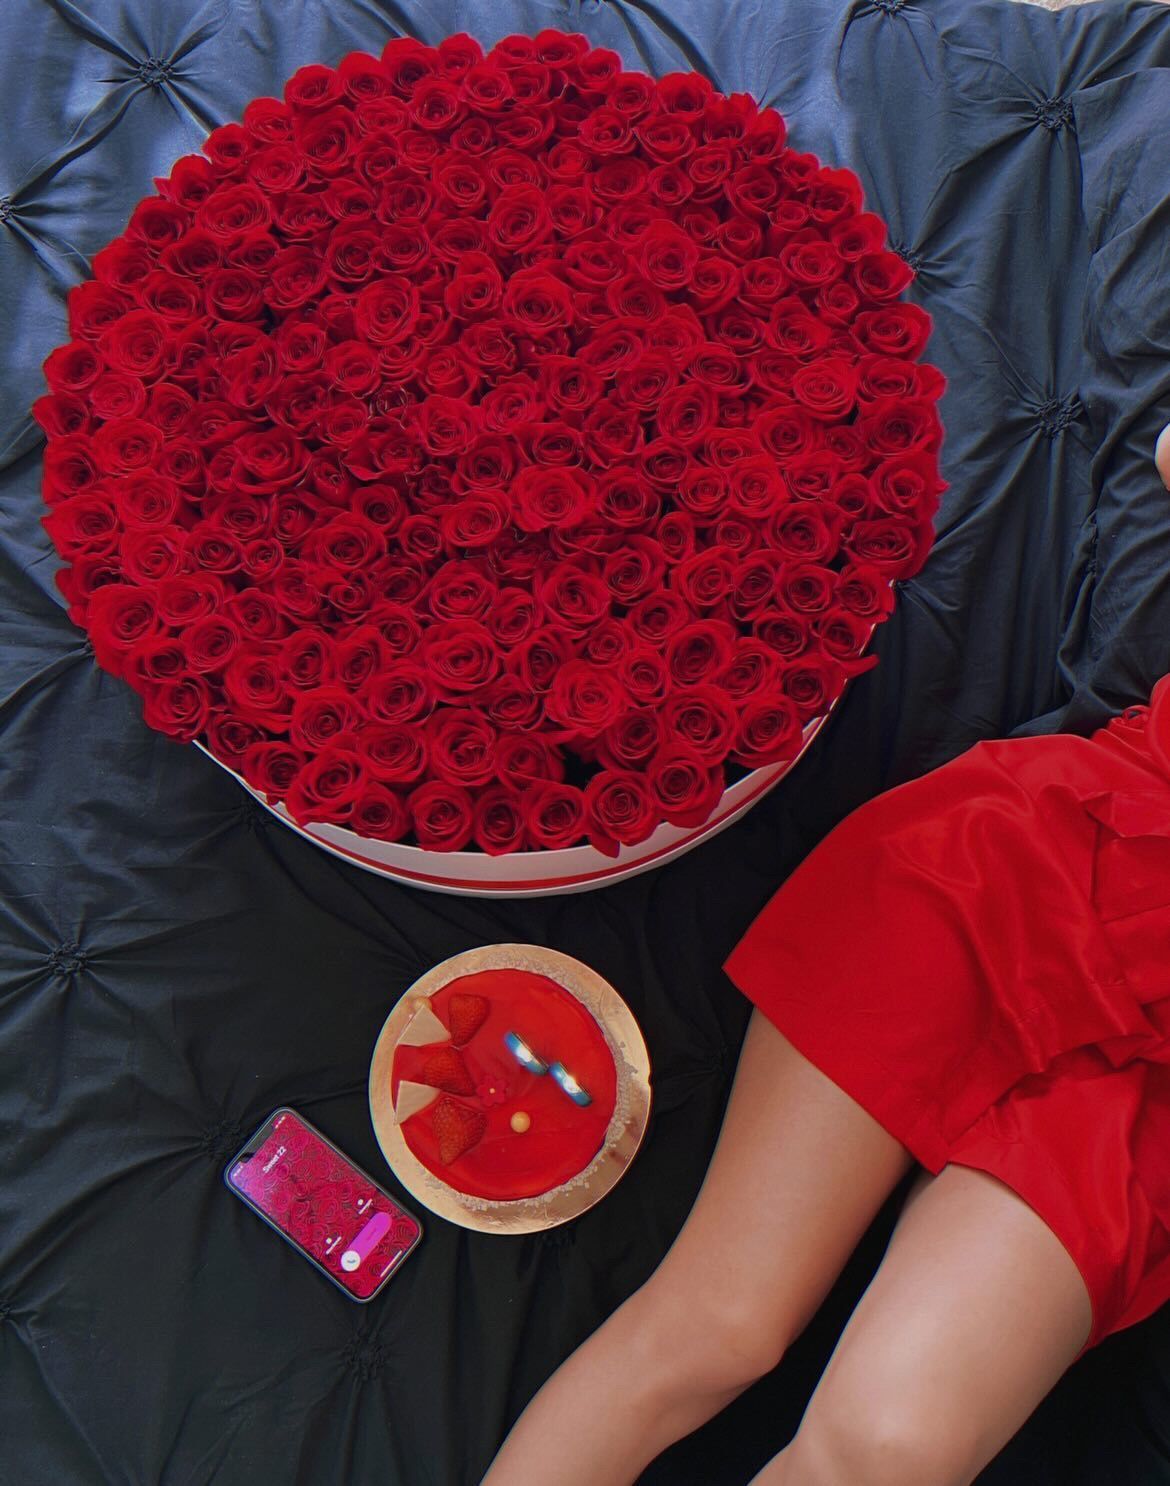 201 Trandafiri criogenați roșii - The Million Luxury